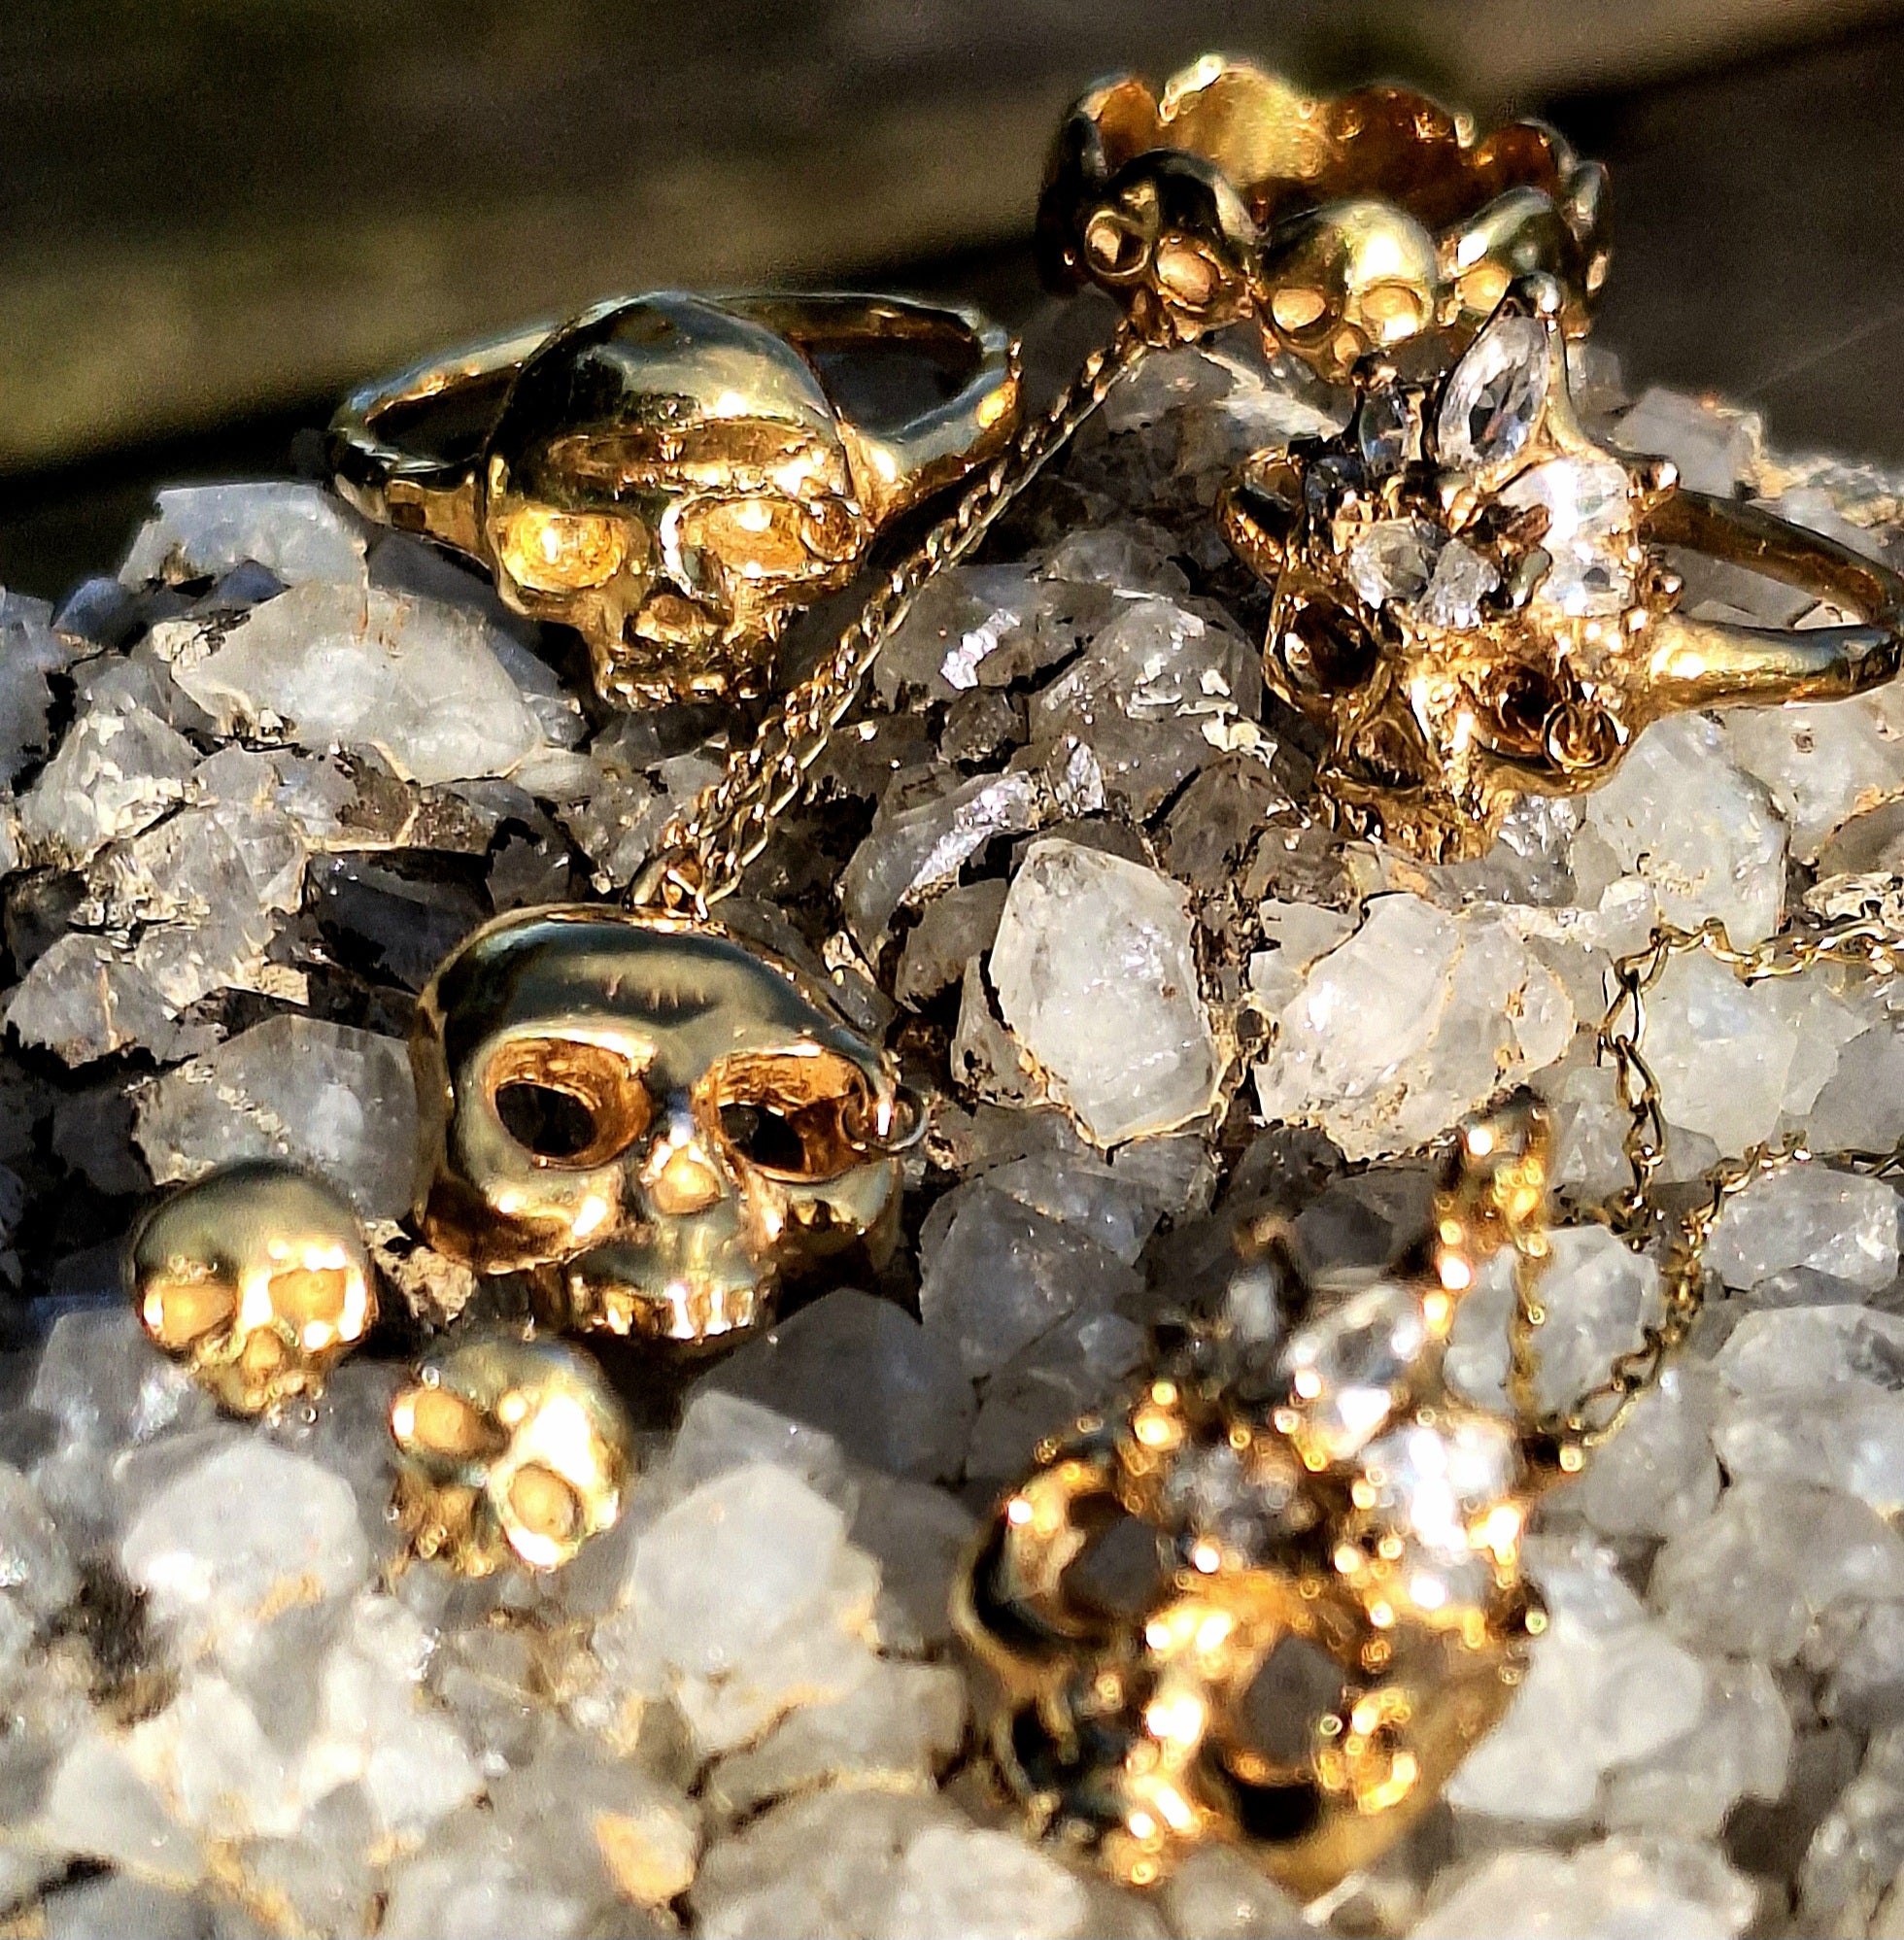 Grainne Mhaol Ring - Gold Plated sterling silver skull ring